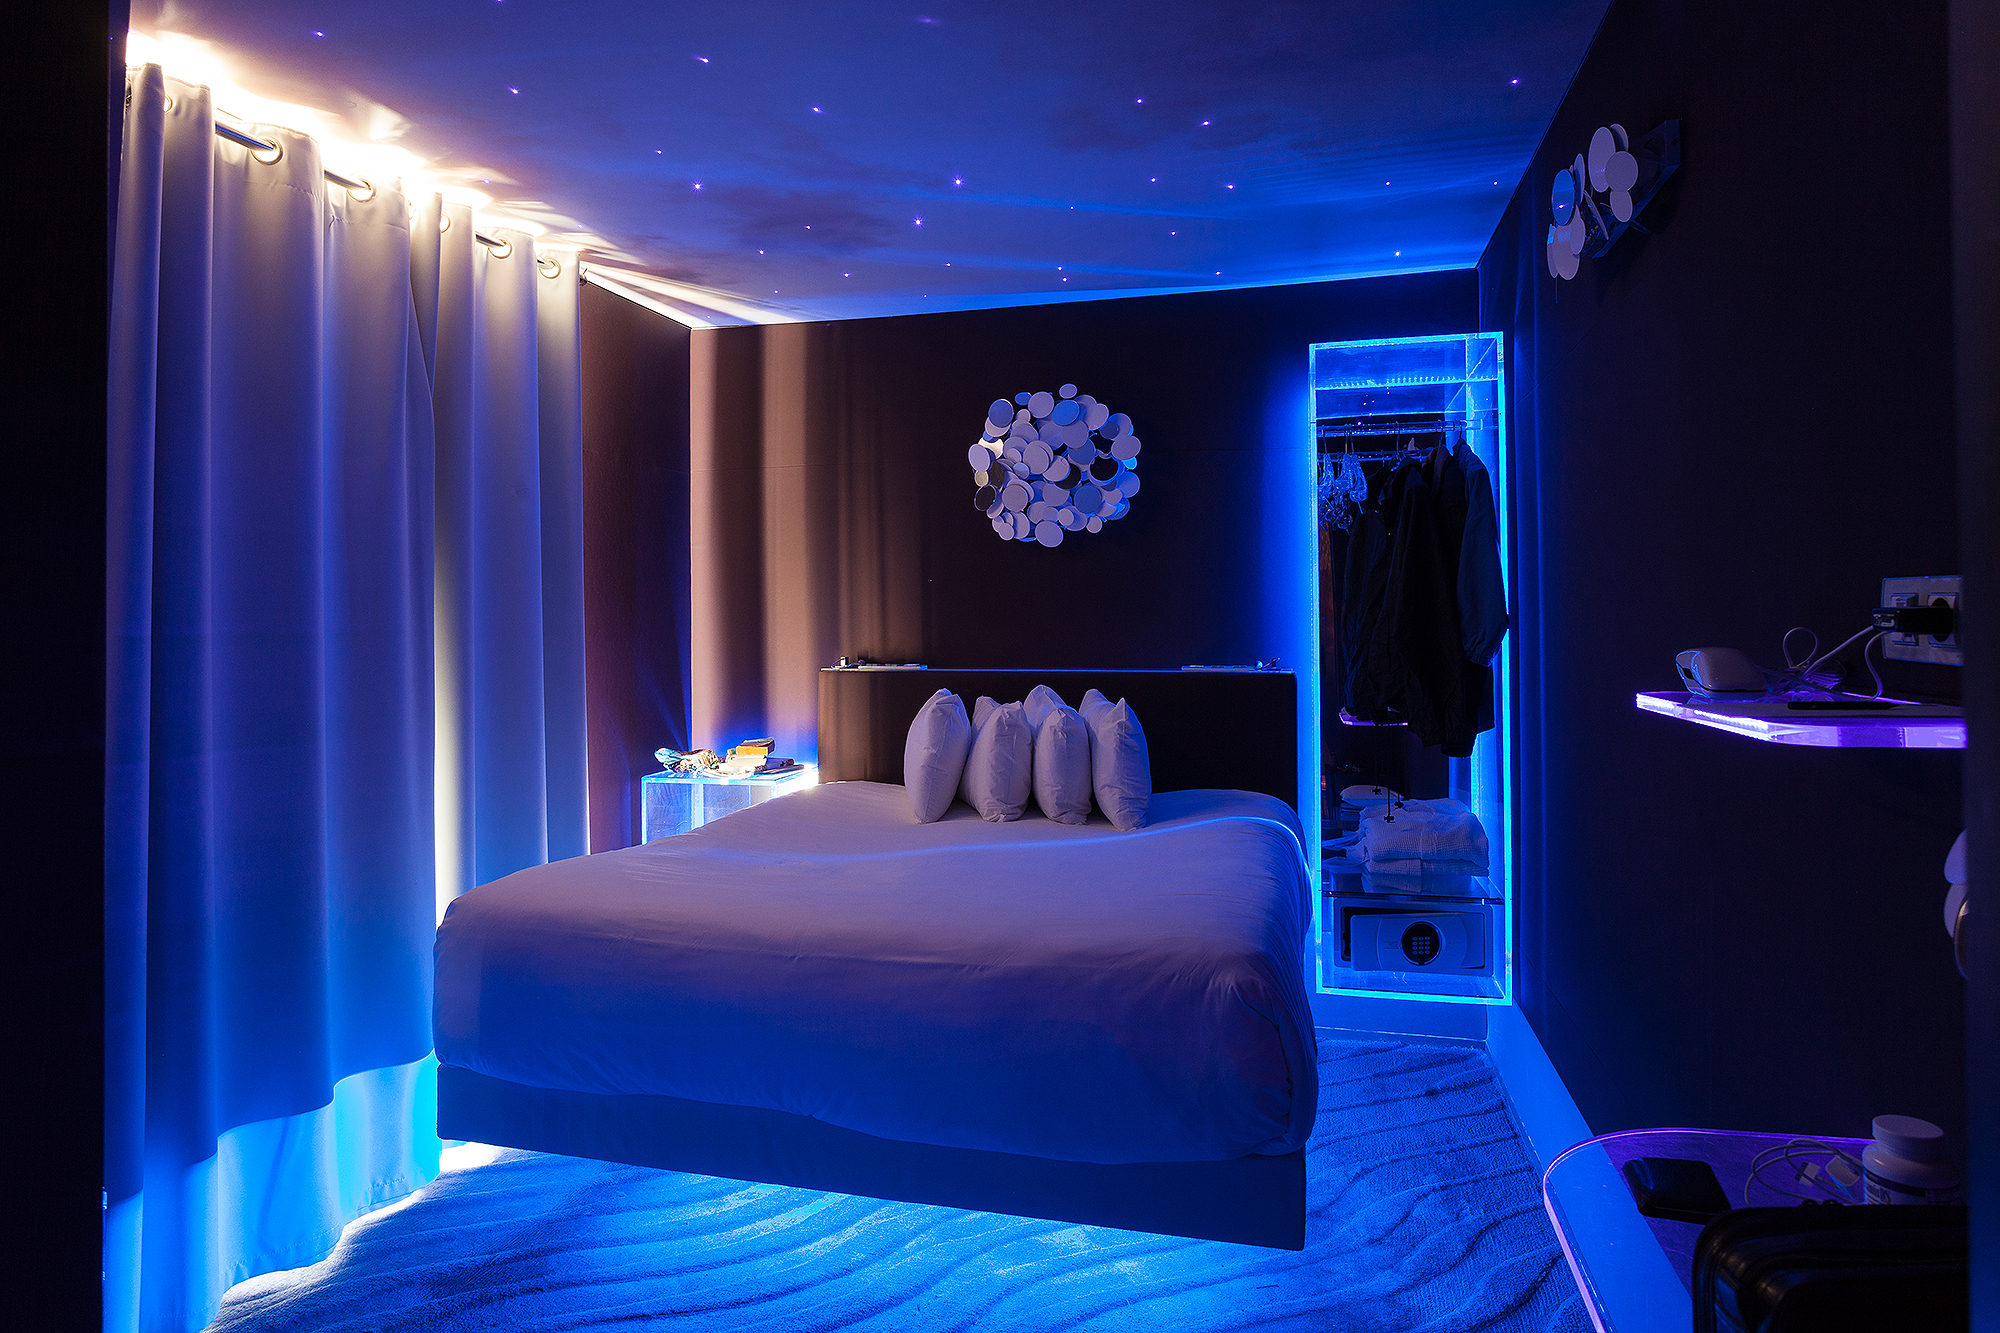 Led Strip Lights For Bedroom Smart Rope Light Strips With 44 - Temu